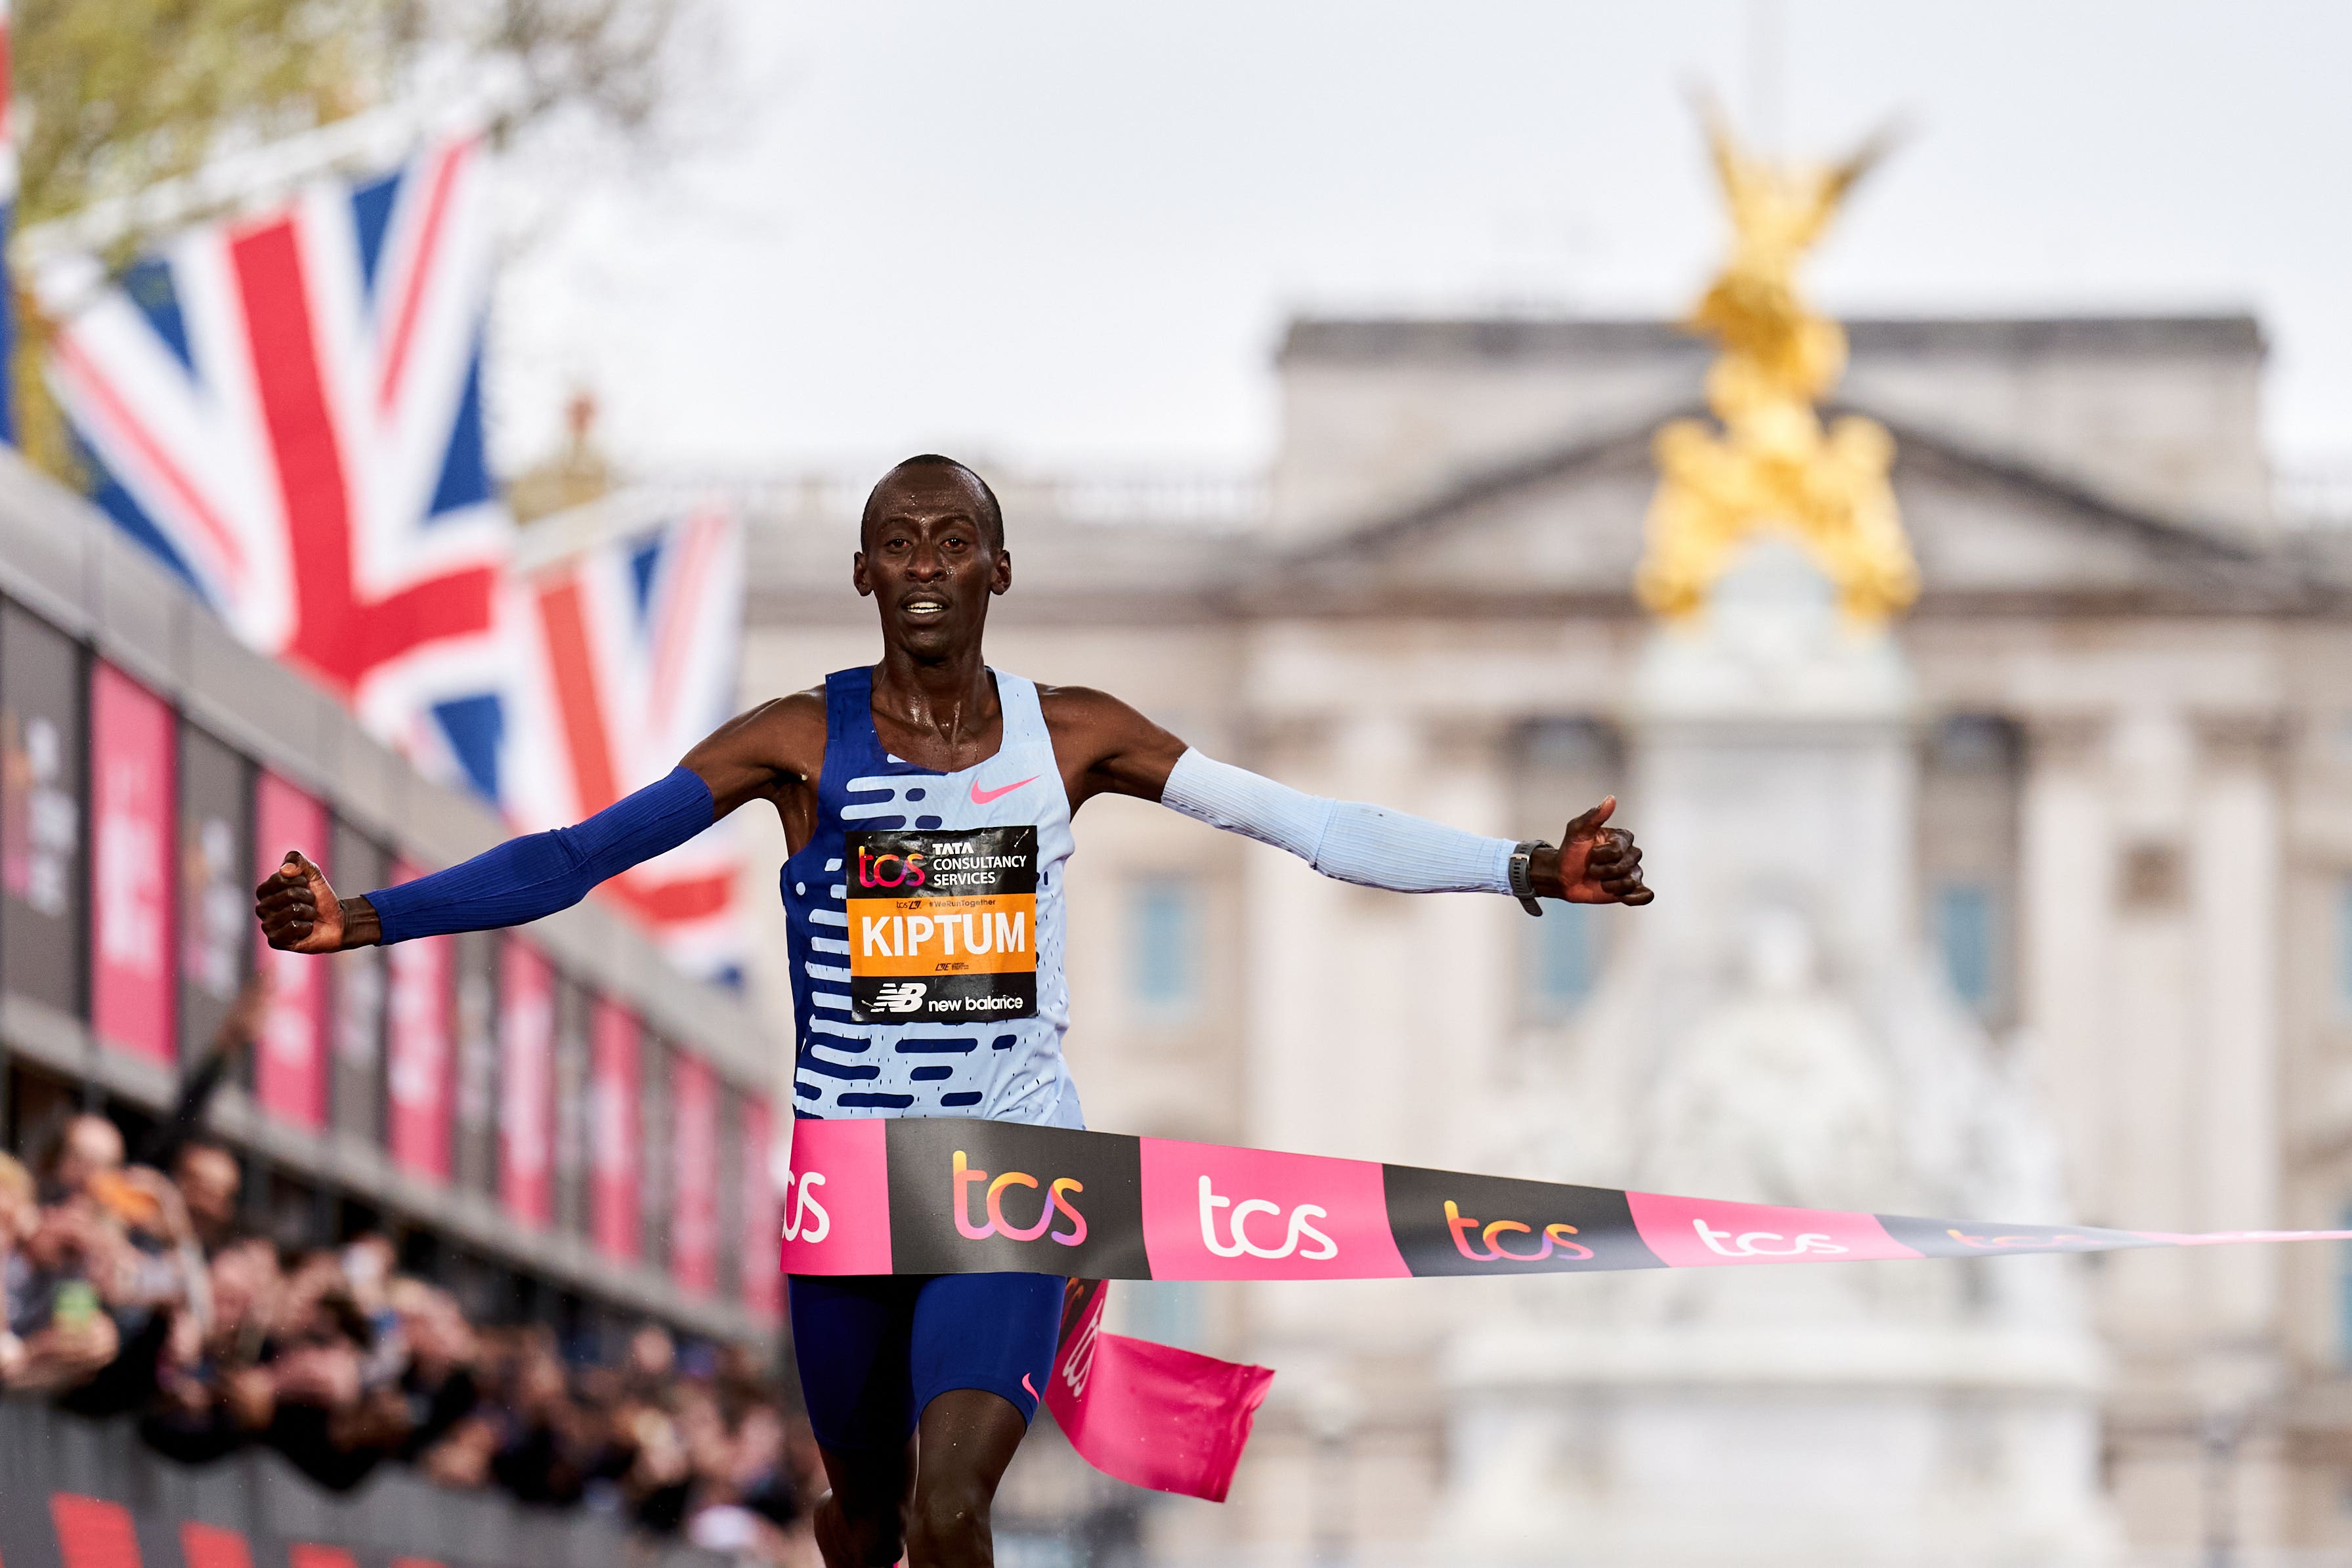 Kelvin Kiptum won last year’s London Marathon in a record time